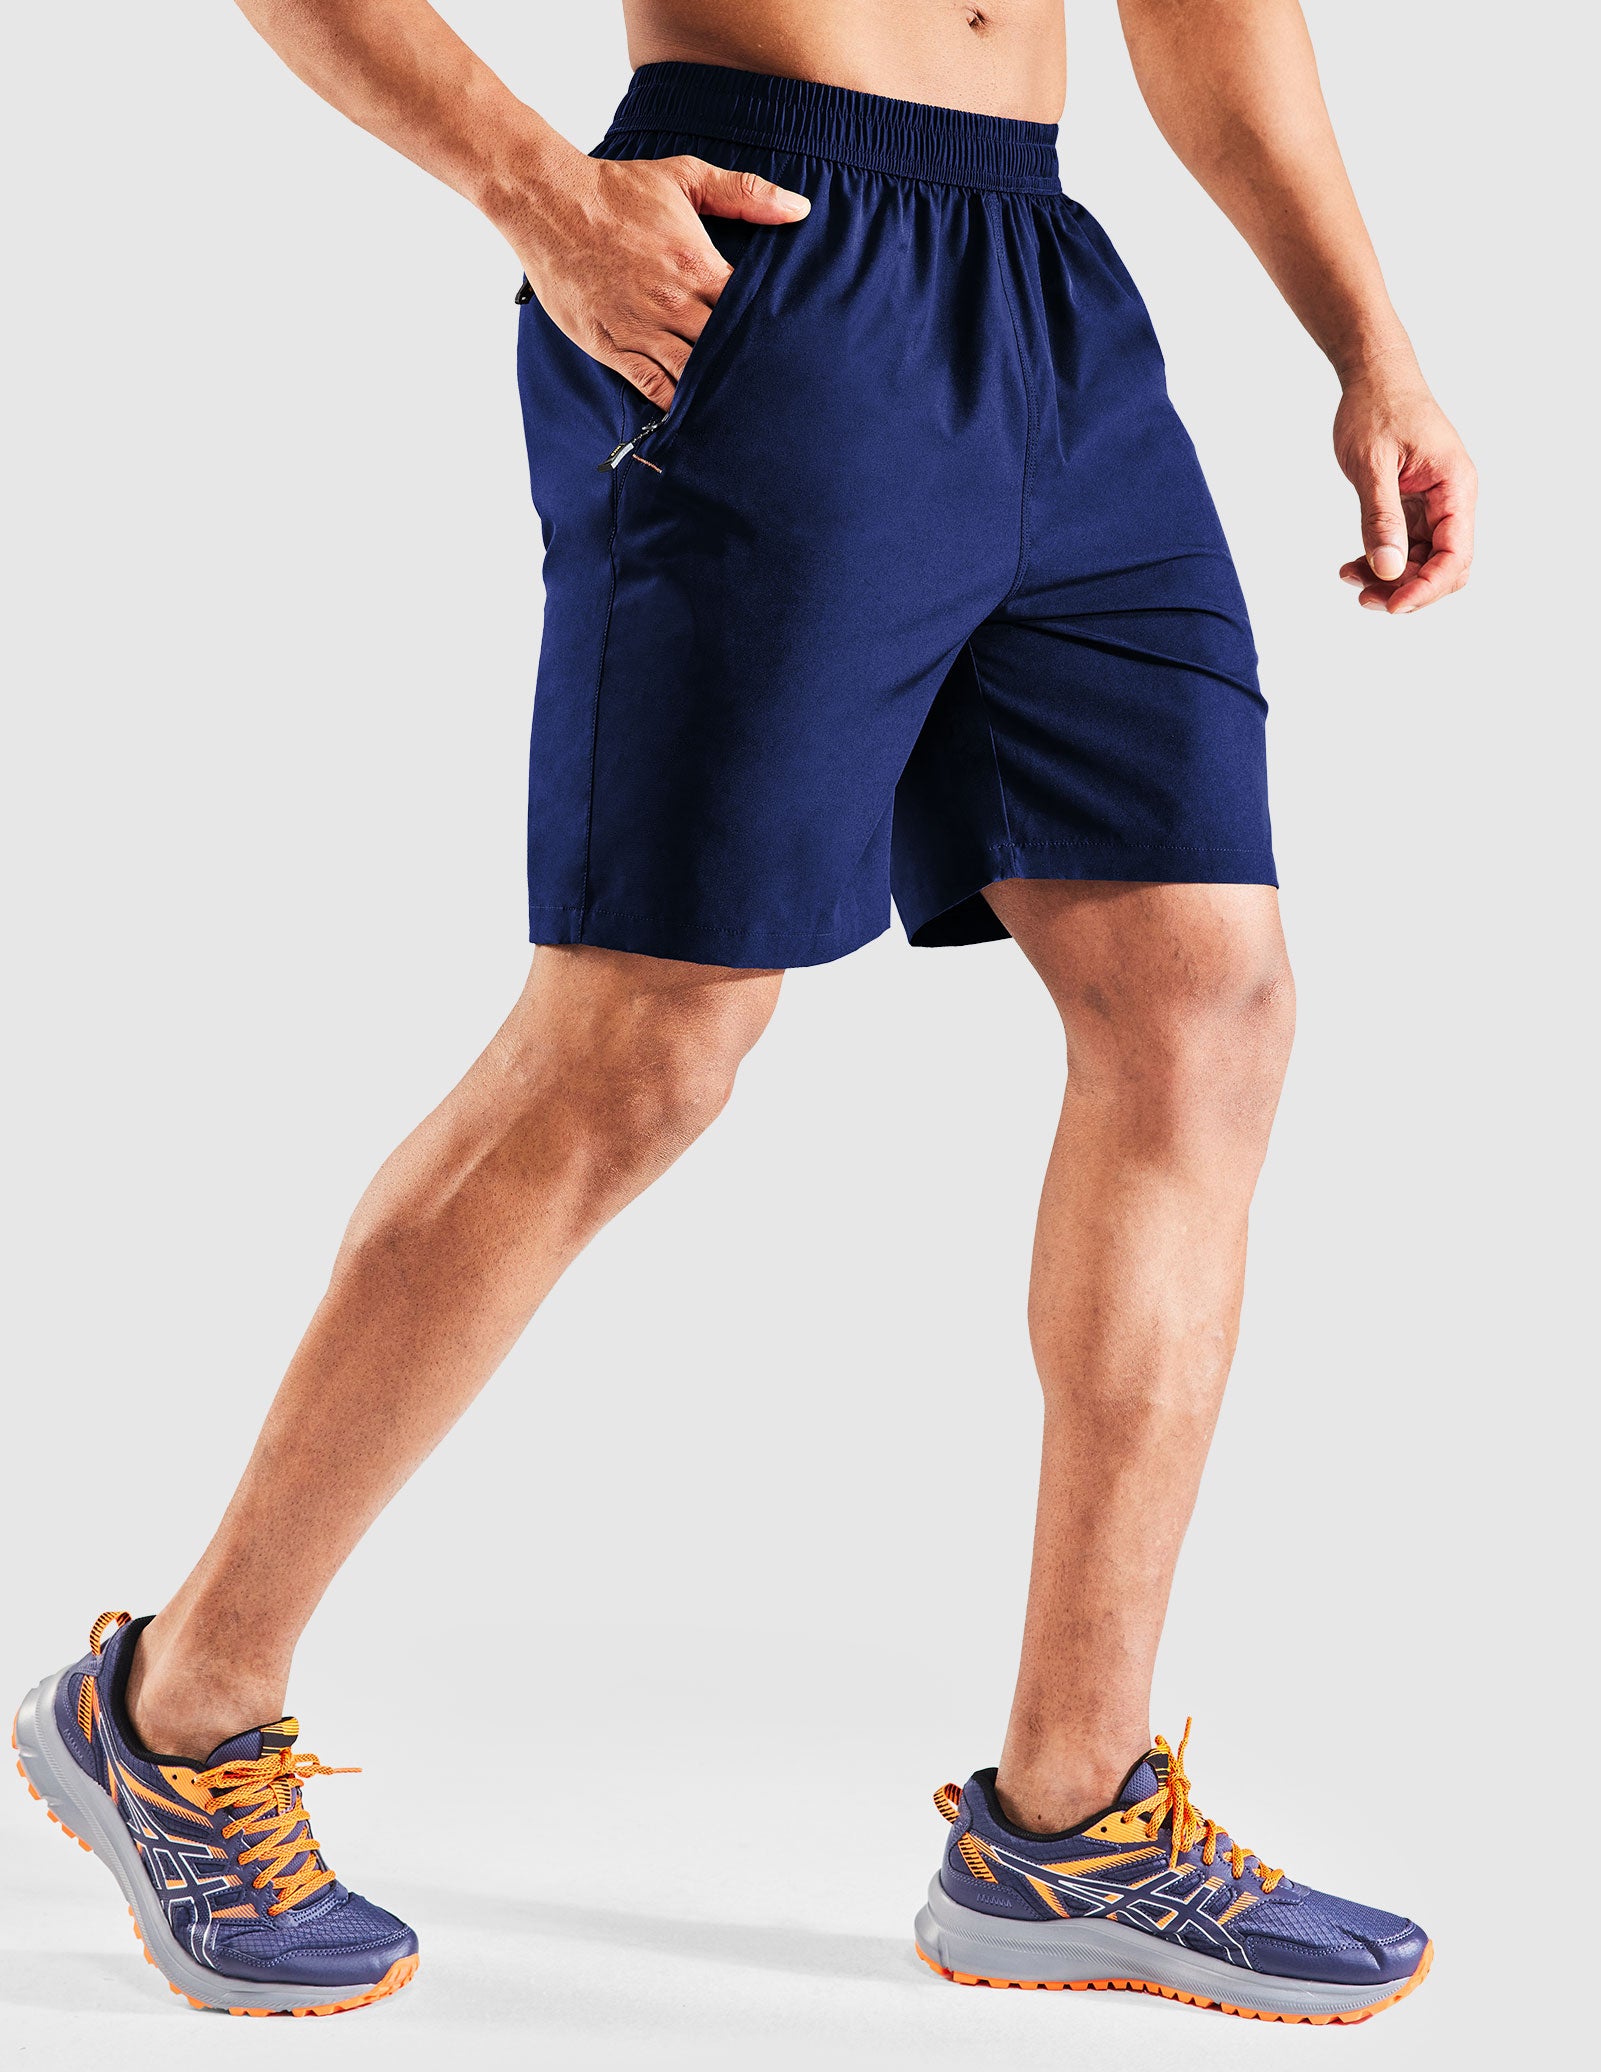  Pantalones cortos de correr para hombre, para entrenamiento,  maratón, de secado rápido, para verano, pantalones cortos deportivos  delgados para gimnasio, con bolsillo con cremallera (color C, tamaño: XXL  Code) : Ropa